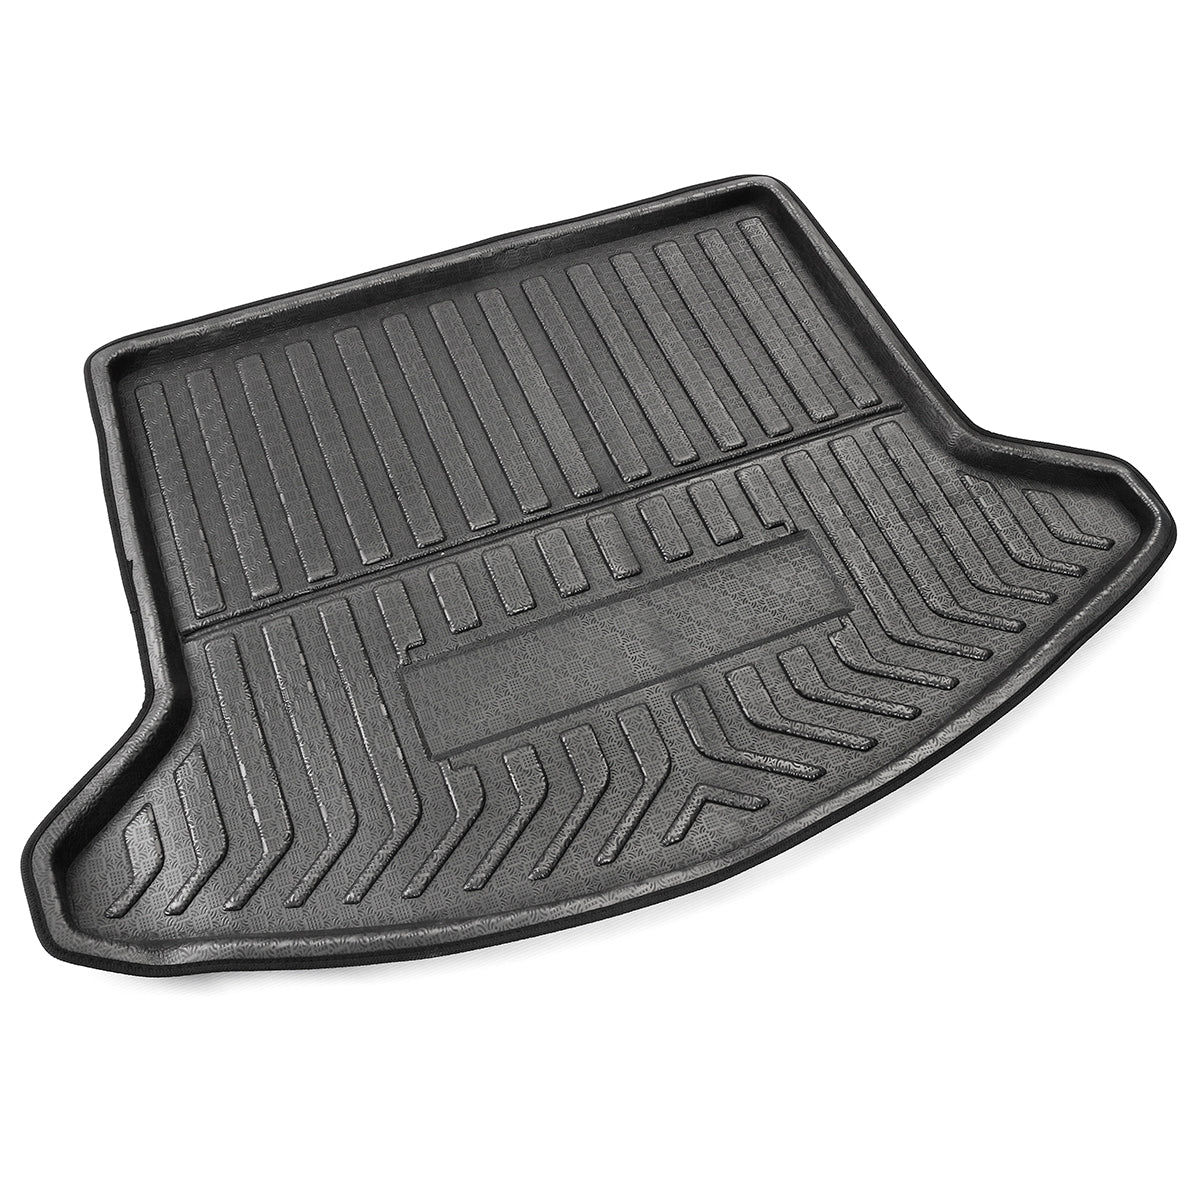 PE Car Rear Boot Trunk Cargo Dent Floor Protector Mat Tray for Mazda CX-5 CX5 MK2 17-18 - Auto GoShop